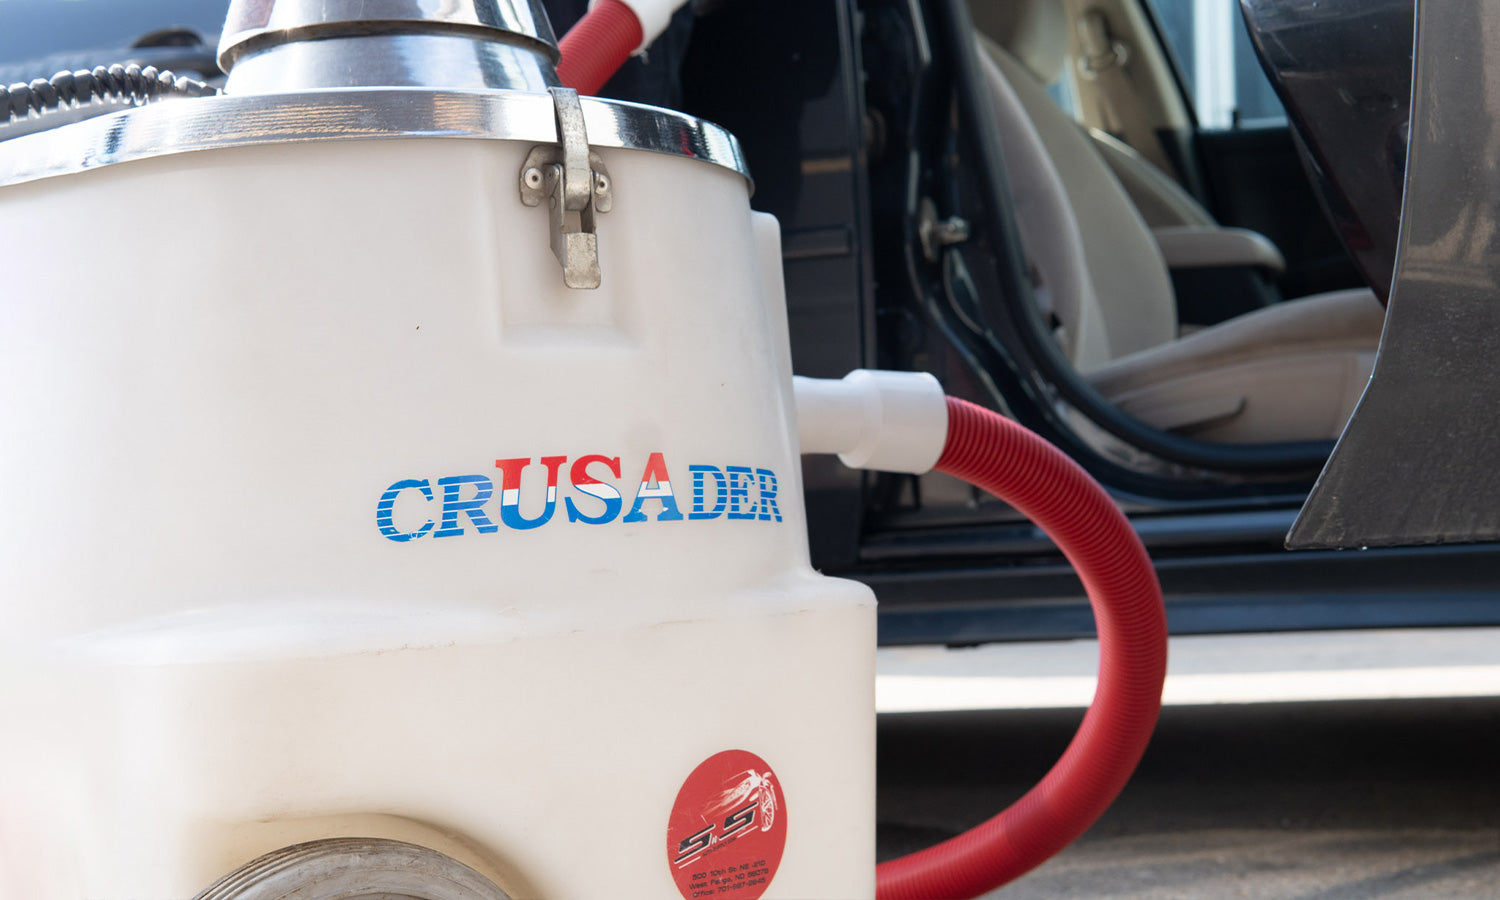 where-to-buy-crusader-vacuums